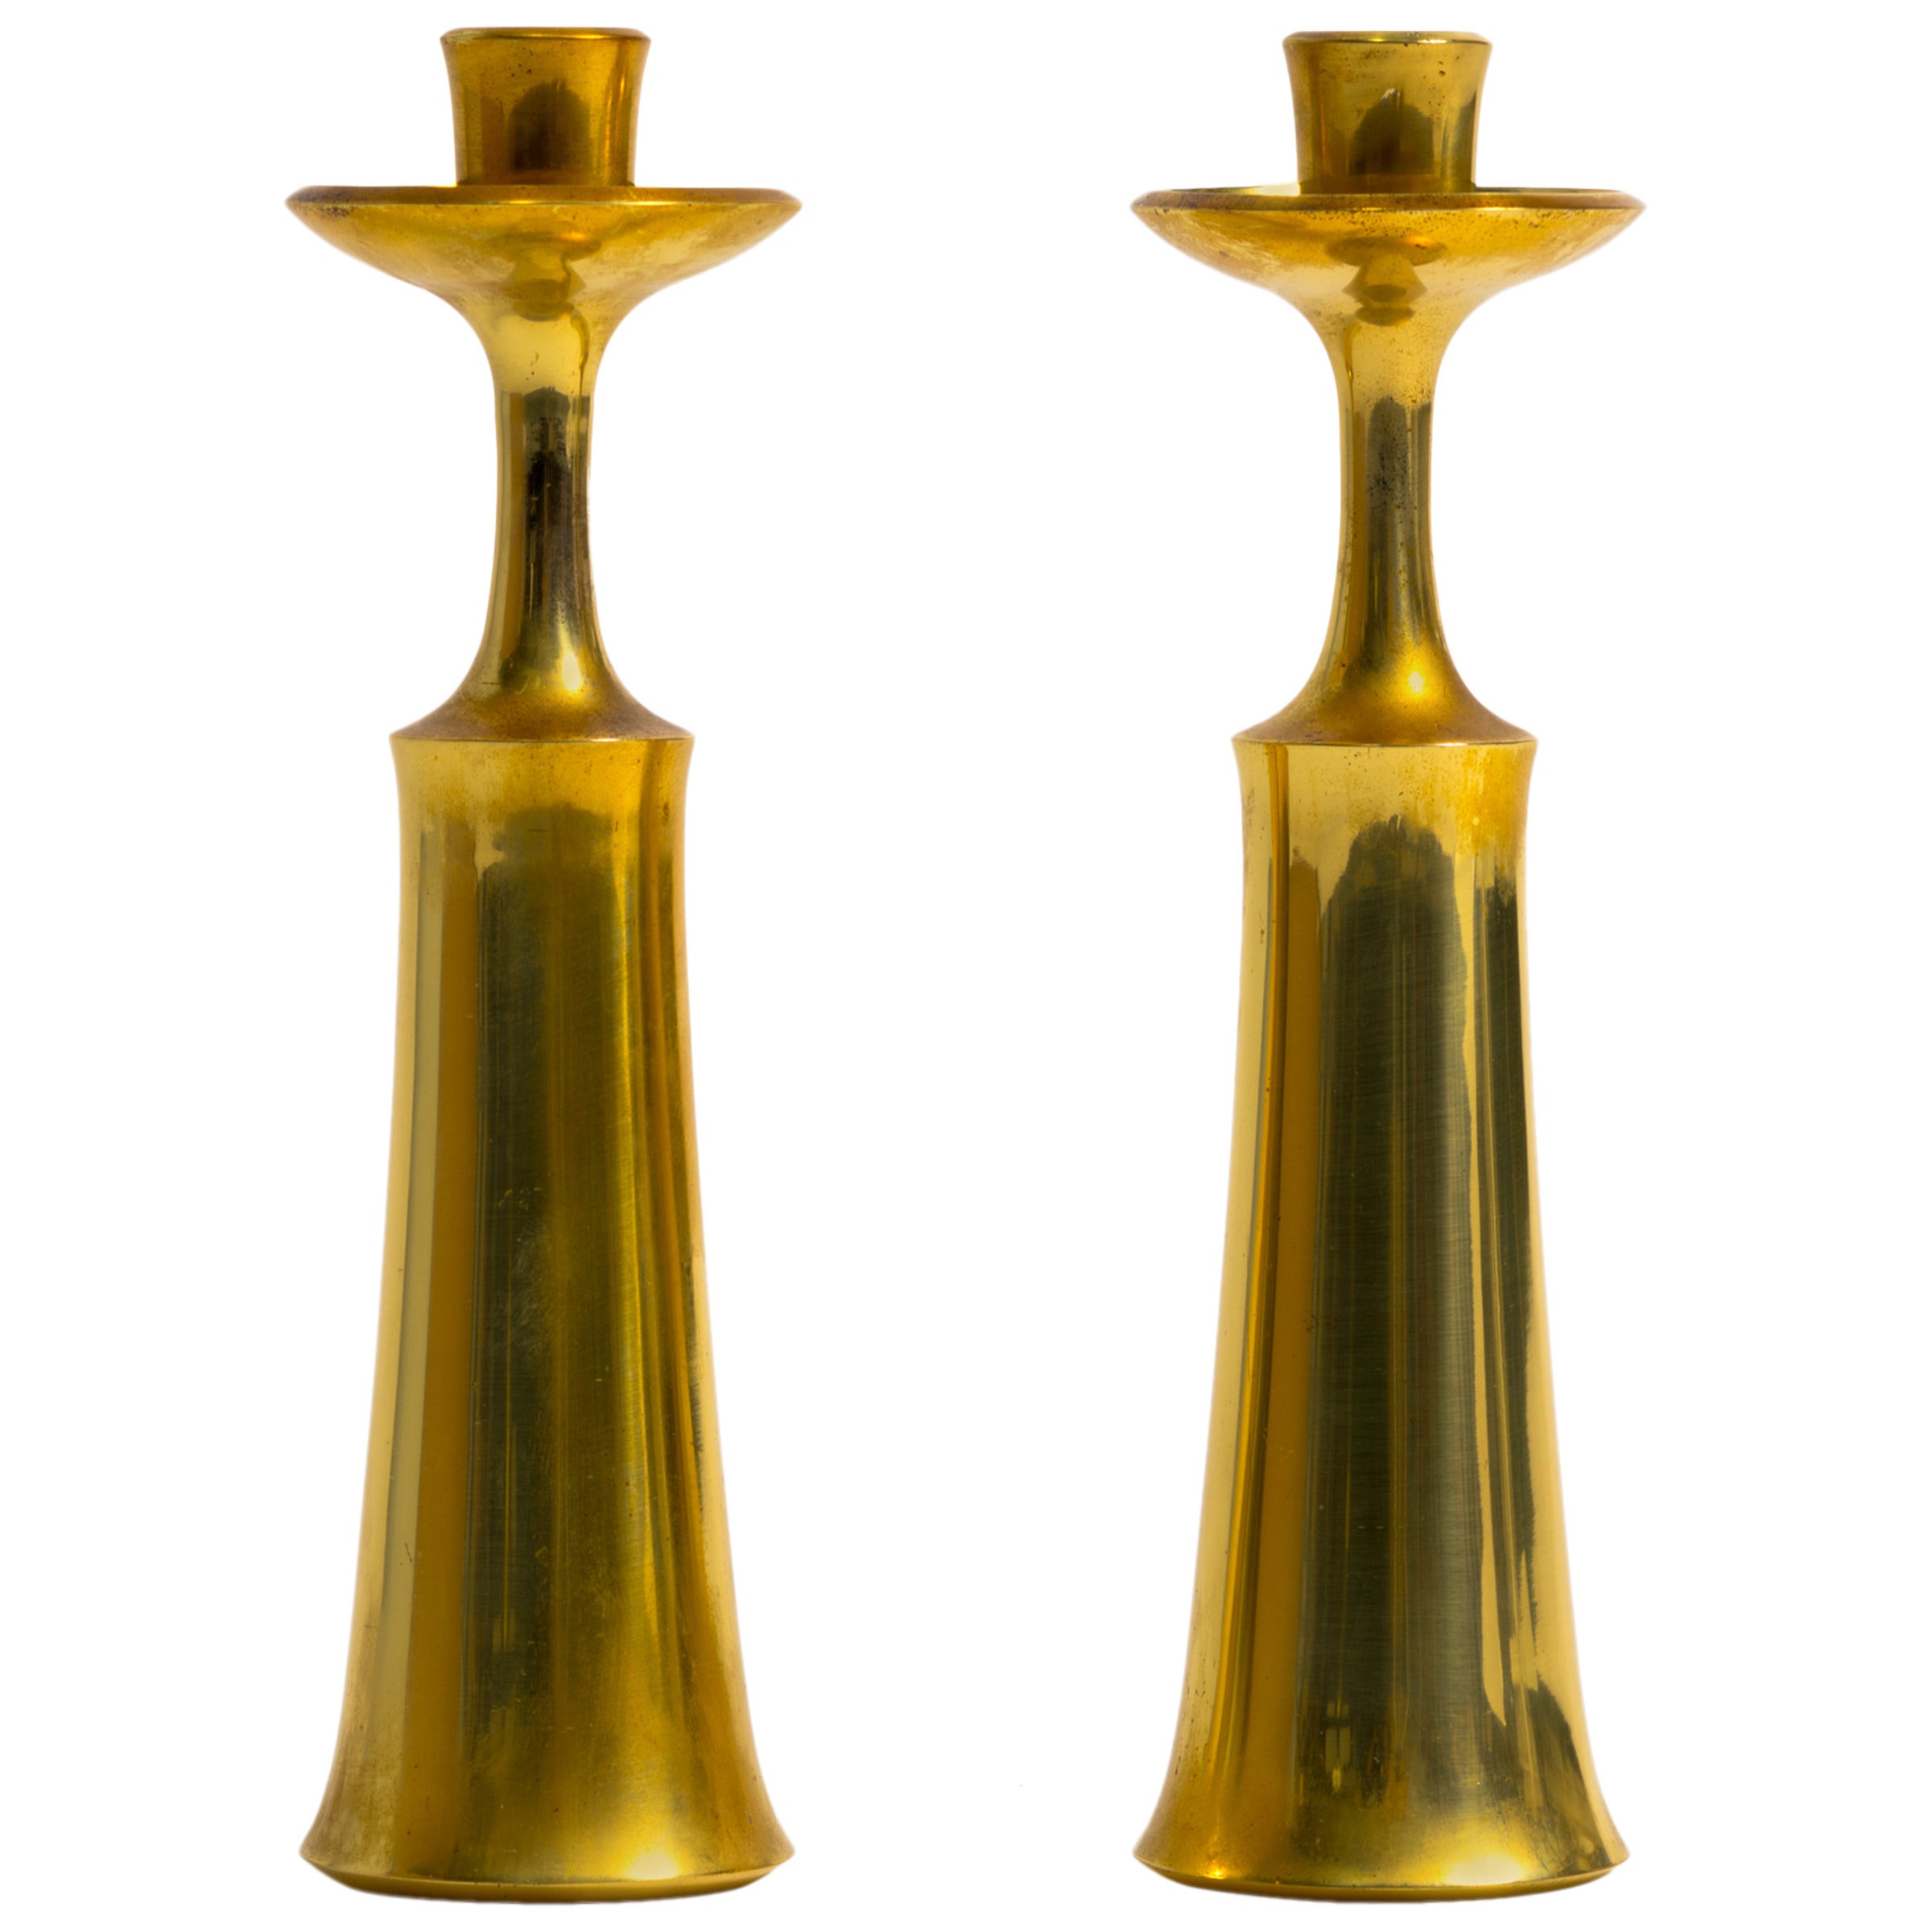 Pair of Brass Candlesticks by Jens Quistgaard for Dansk